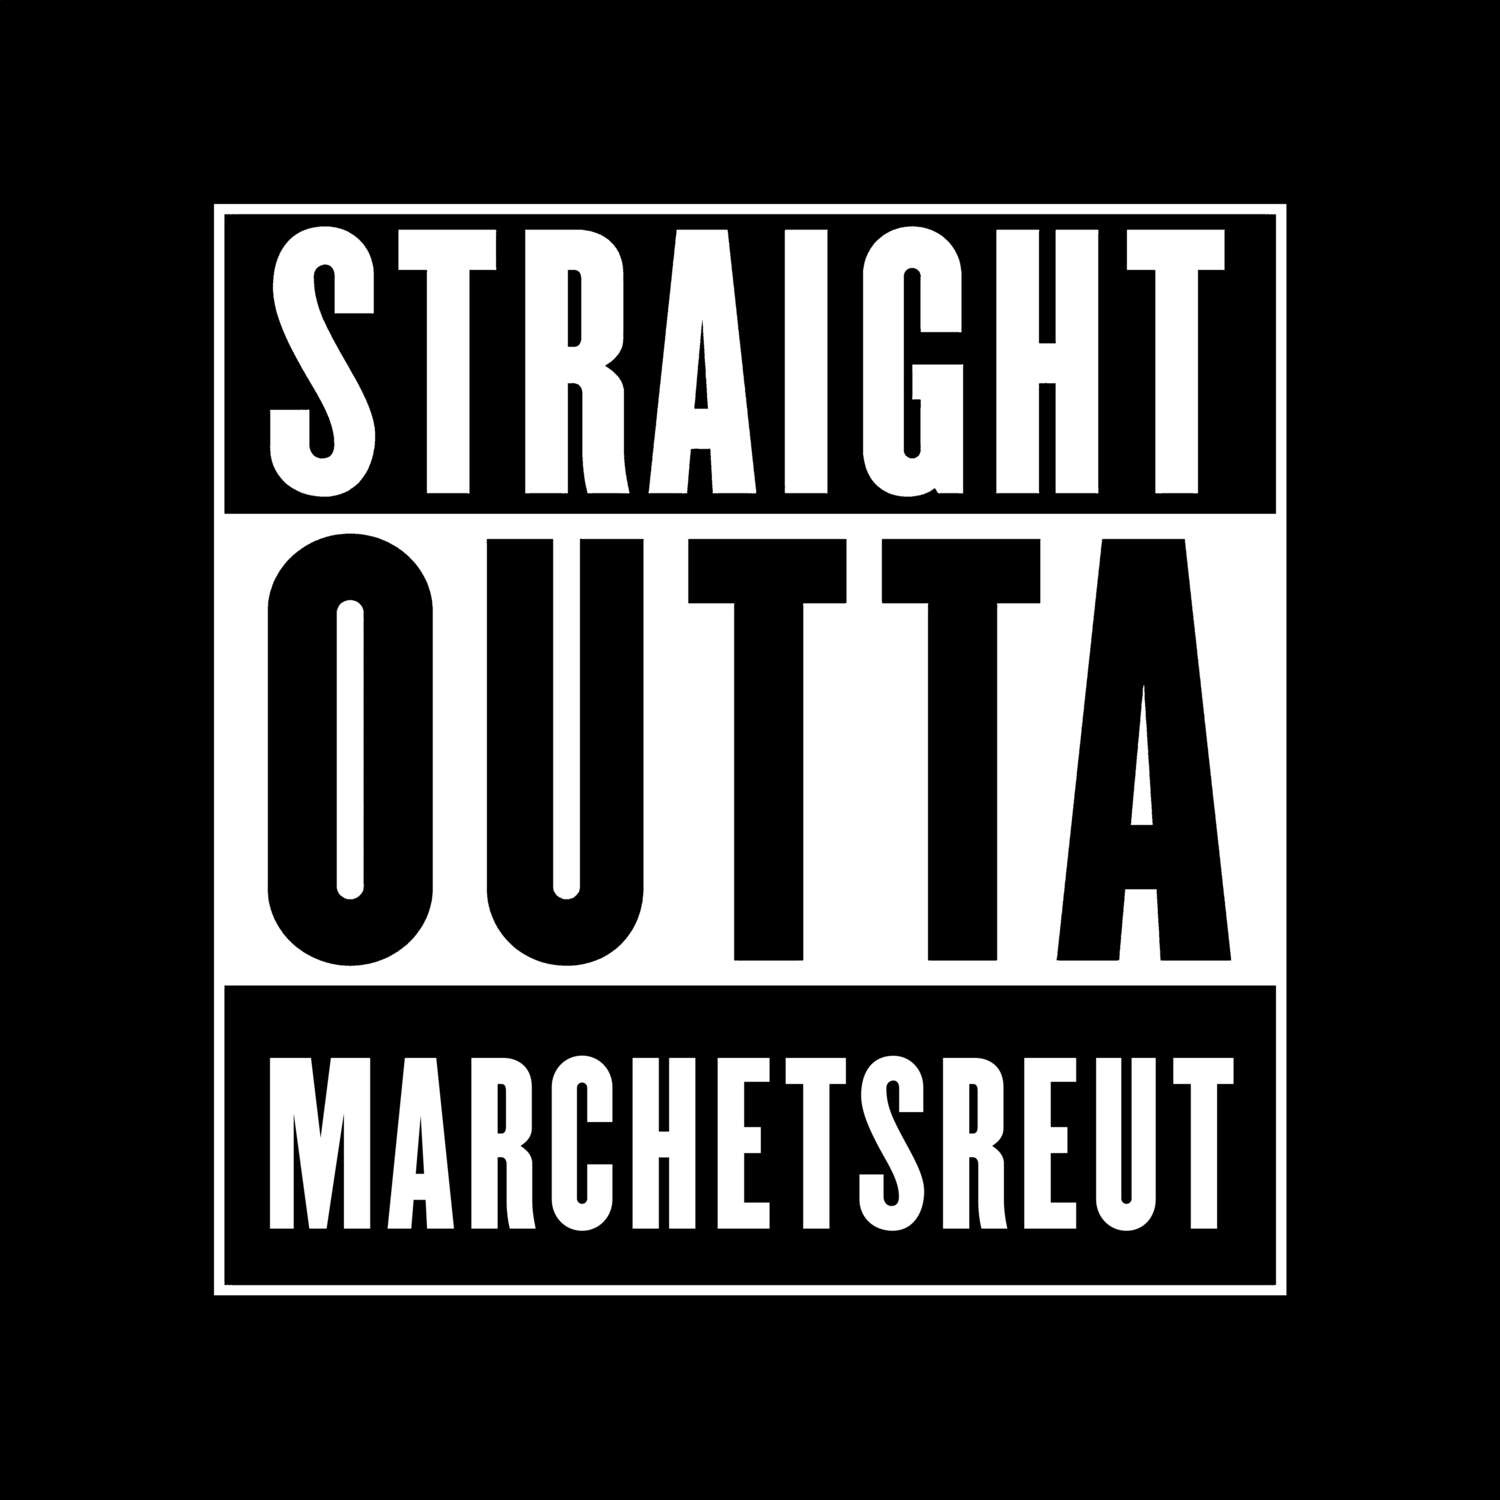 Marchetsreut T-Shirt »Straight Outta«